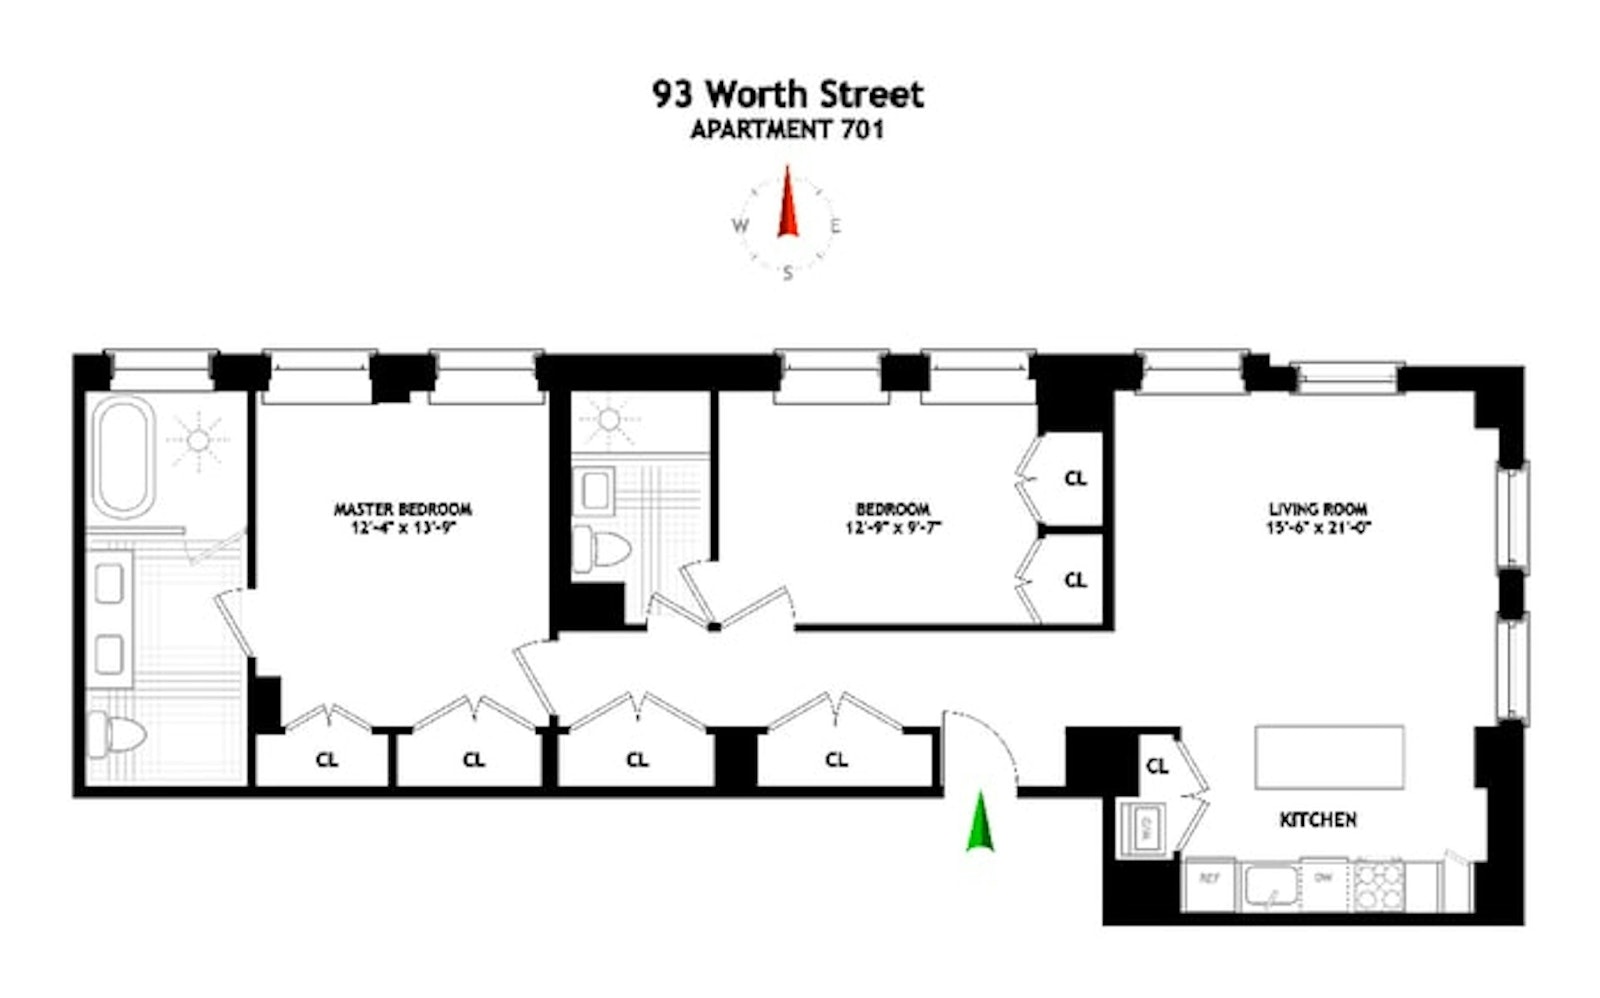 Floorplan for 93 Worth Street, 701